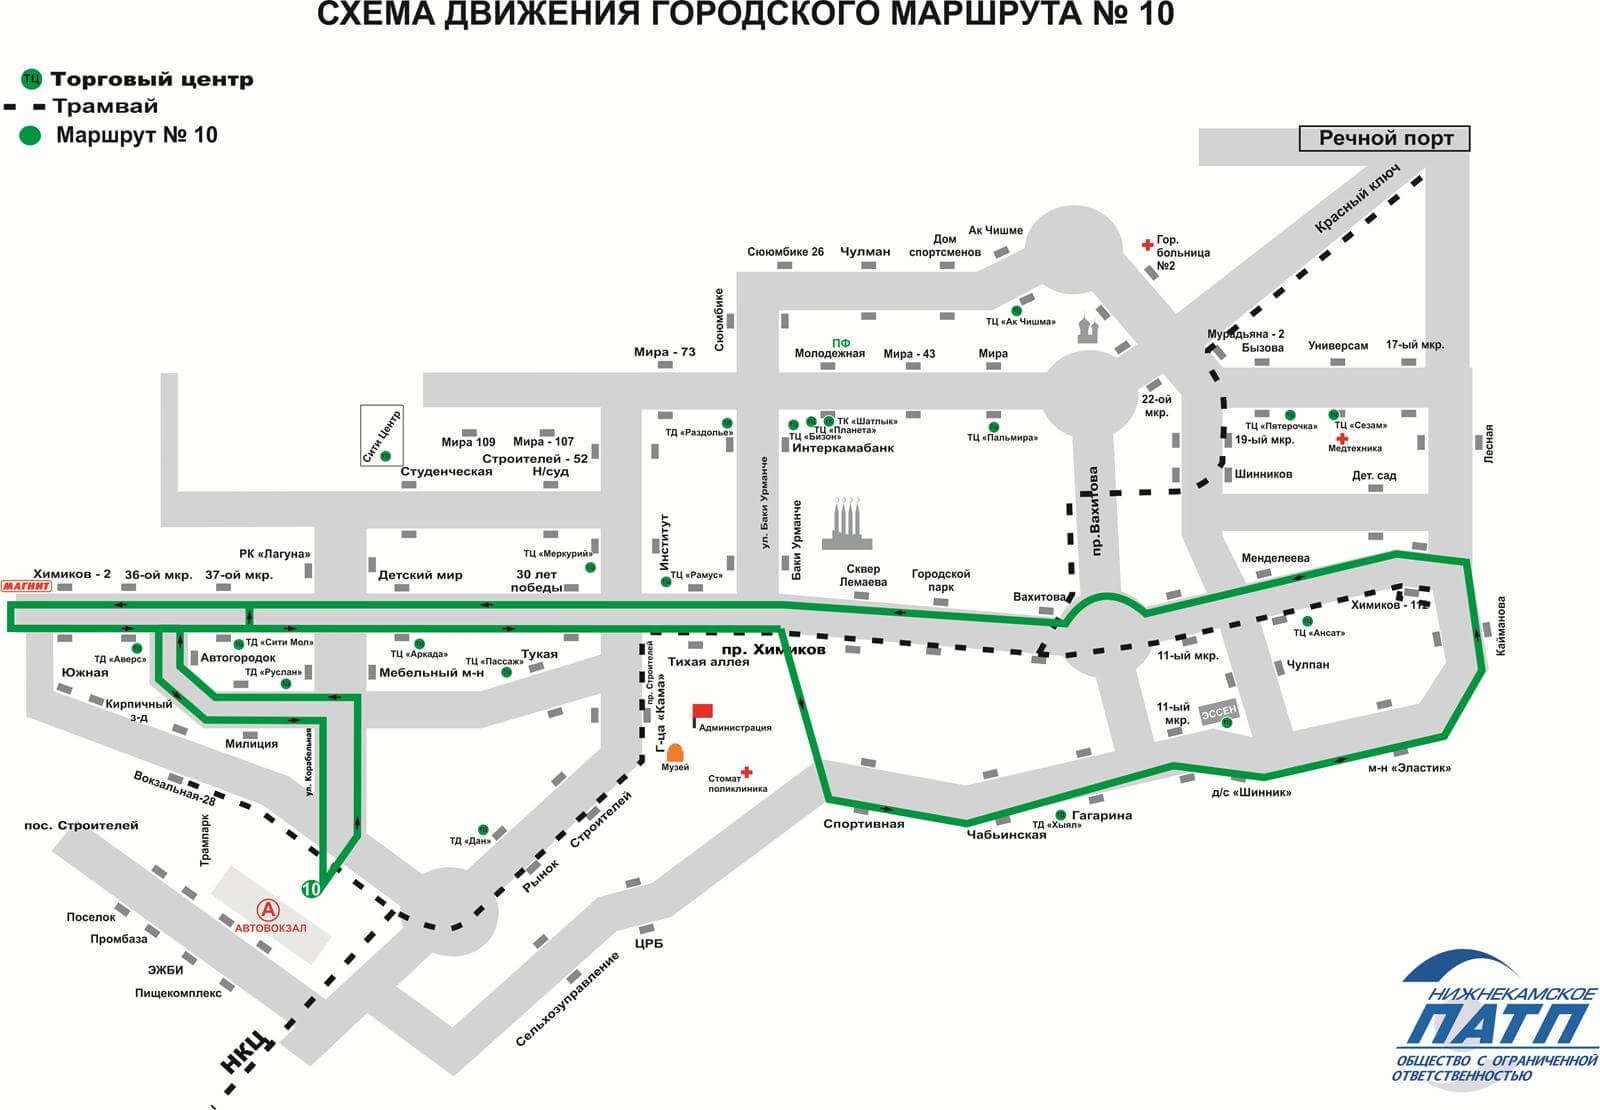 НПАТП маршруты схема 10 маршрута 14.12.2016